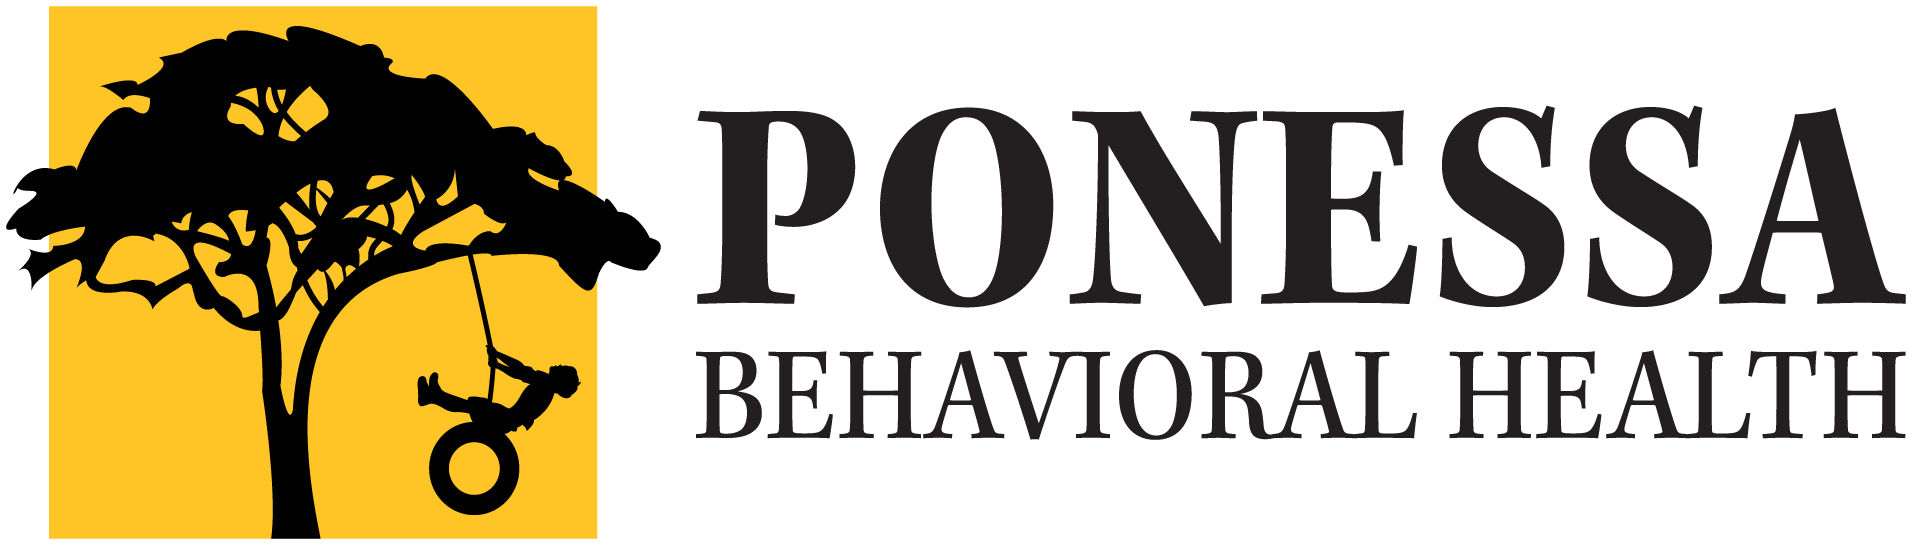 Ponessa Behavioral Health Logo